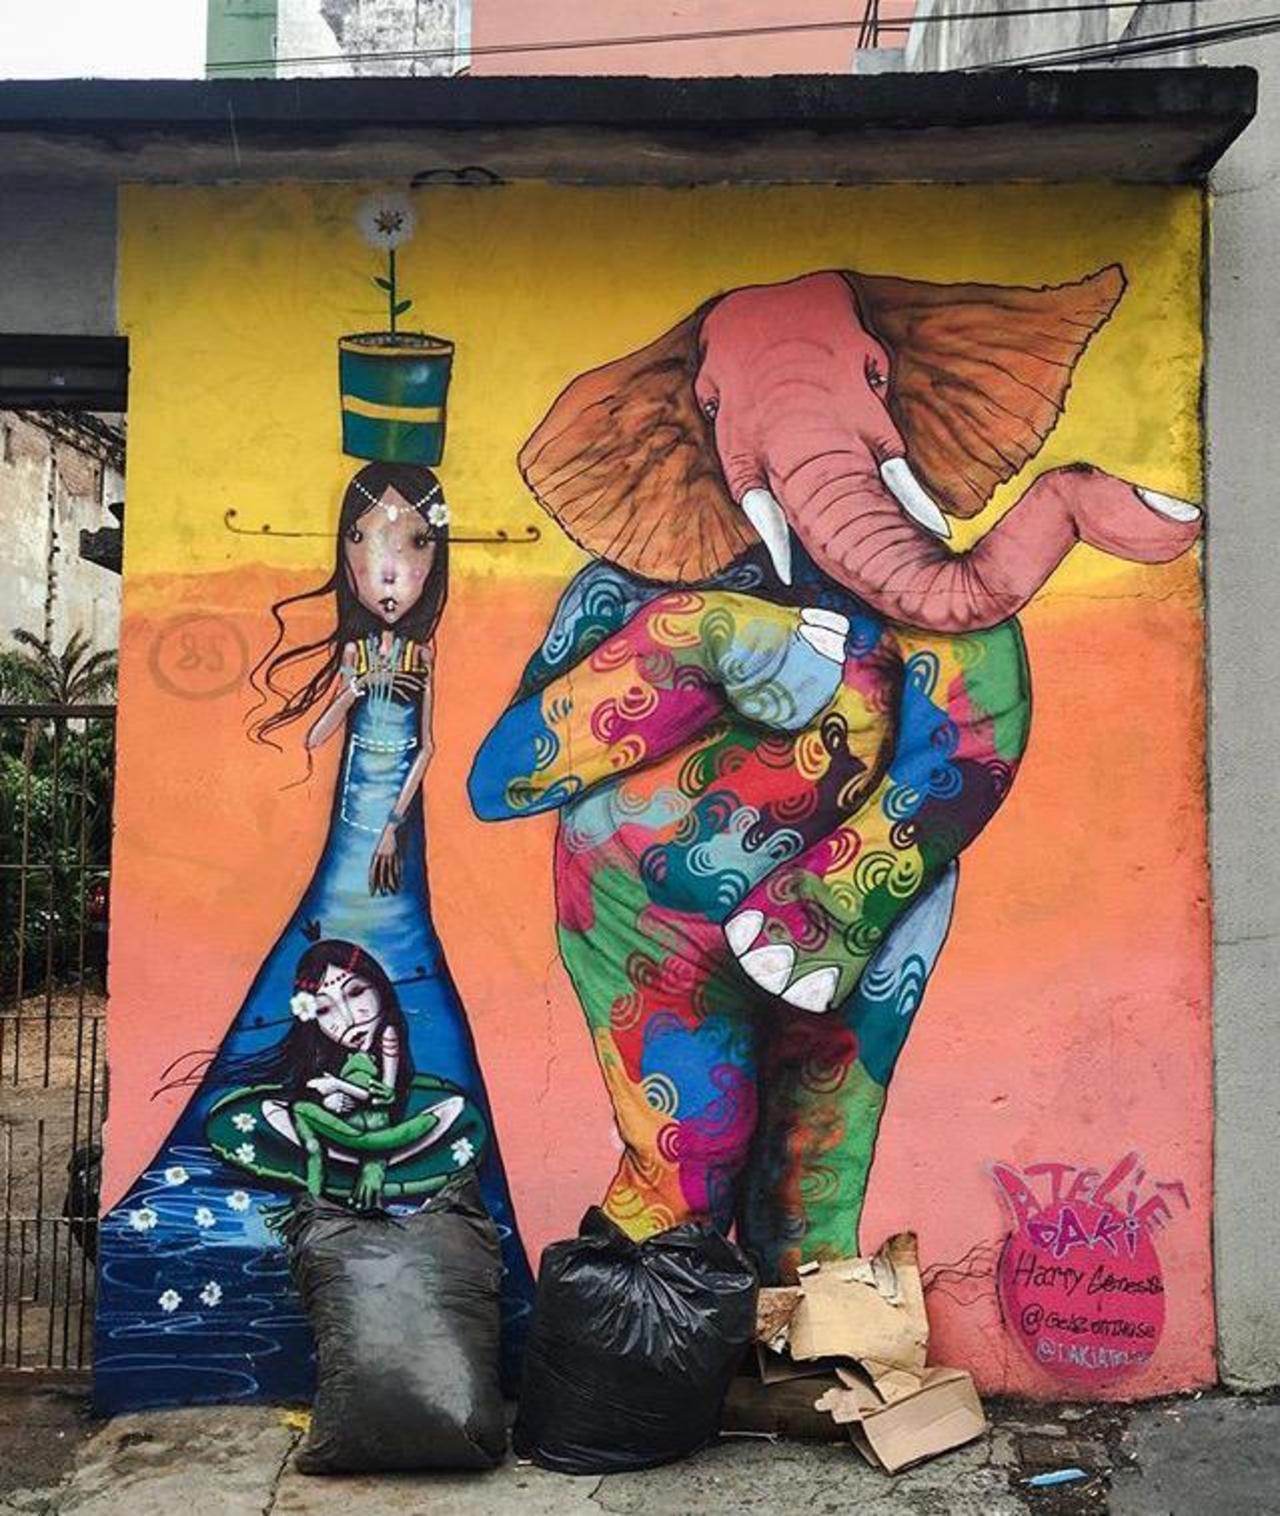 Street Art by Harry Geneis & Gelson in São Paulo #art #mural #graffiti #streetart http://t.co/SlLbhuMZfD … http://twitter.com/GoogleStreetArt/status/648016473831645184/photo/1/large?utm_source=fb&utm_medium=fb&utm_campaign=charlesjackso14&utm_content=648021459575697408